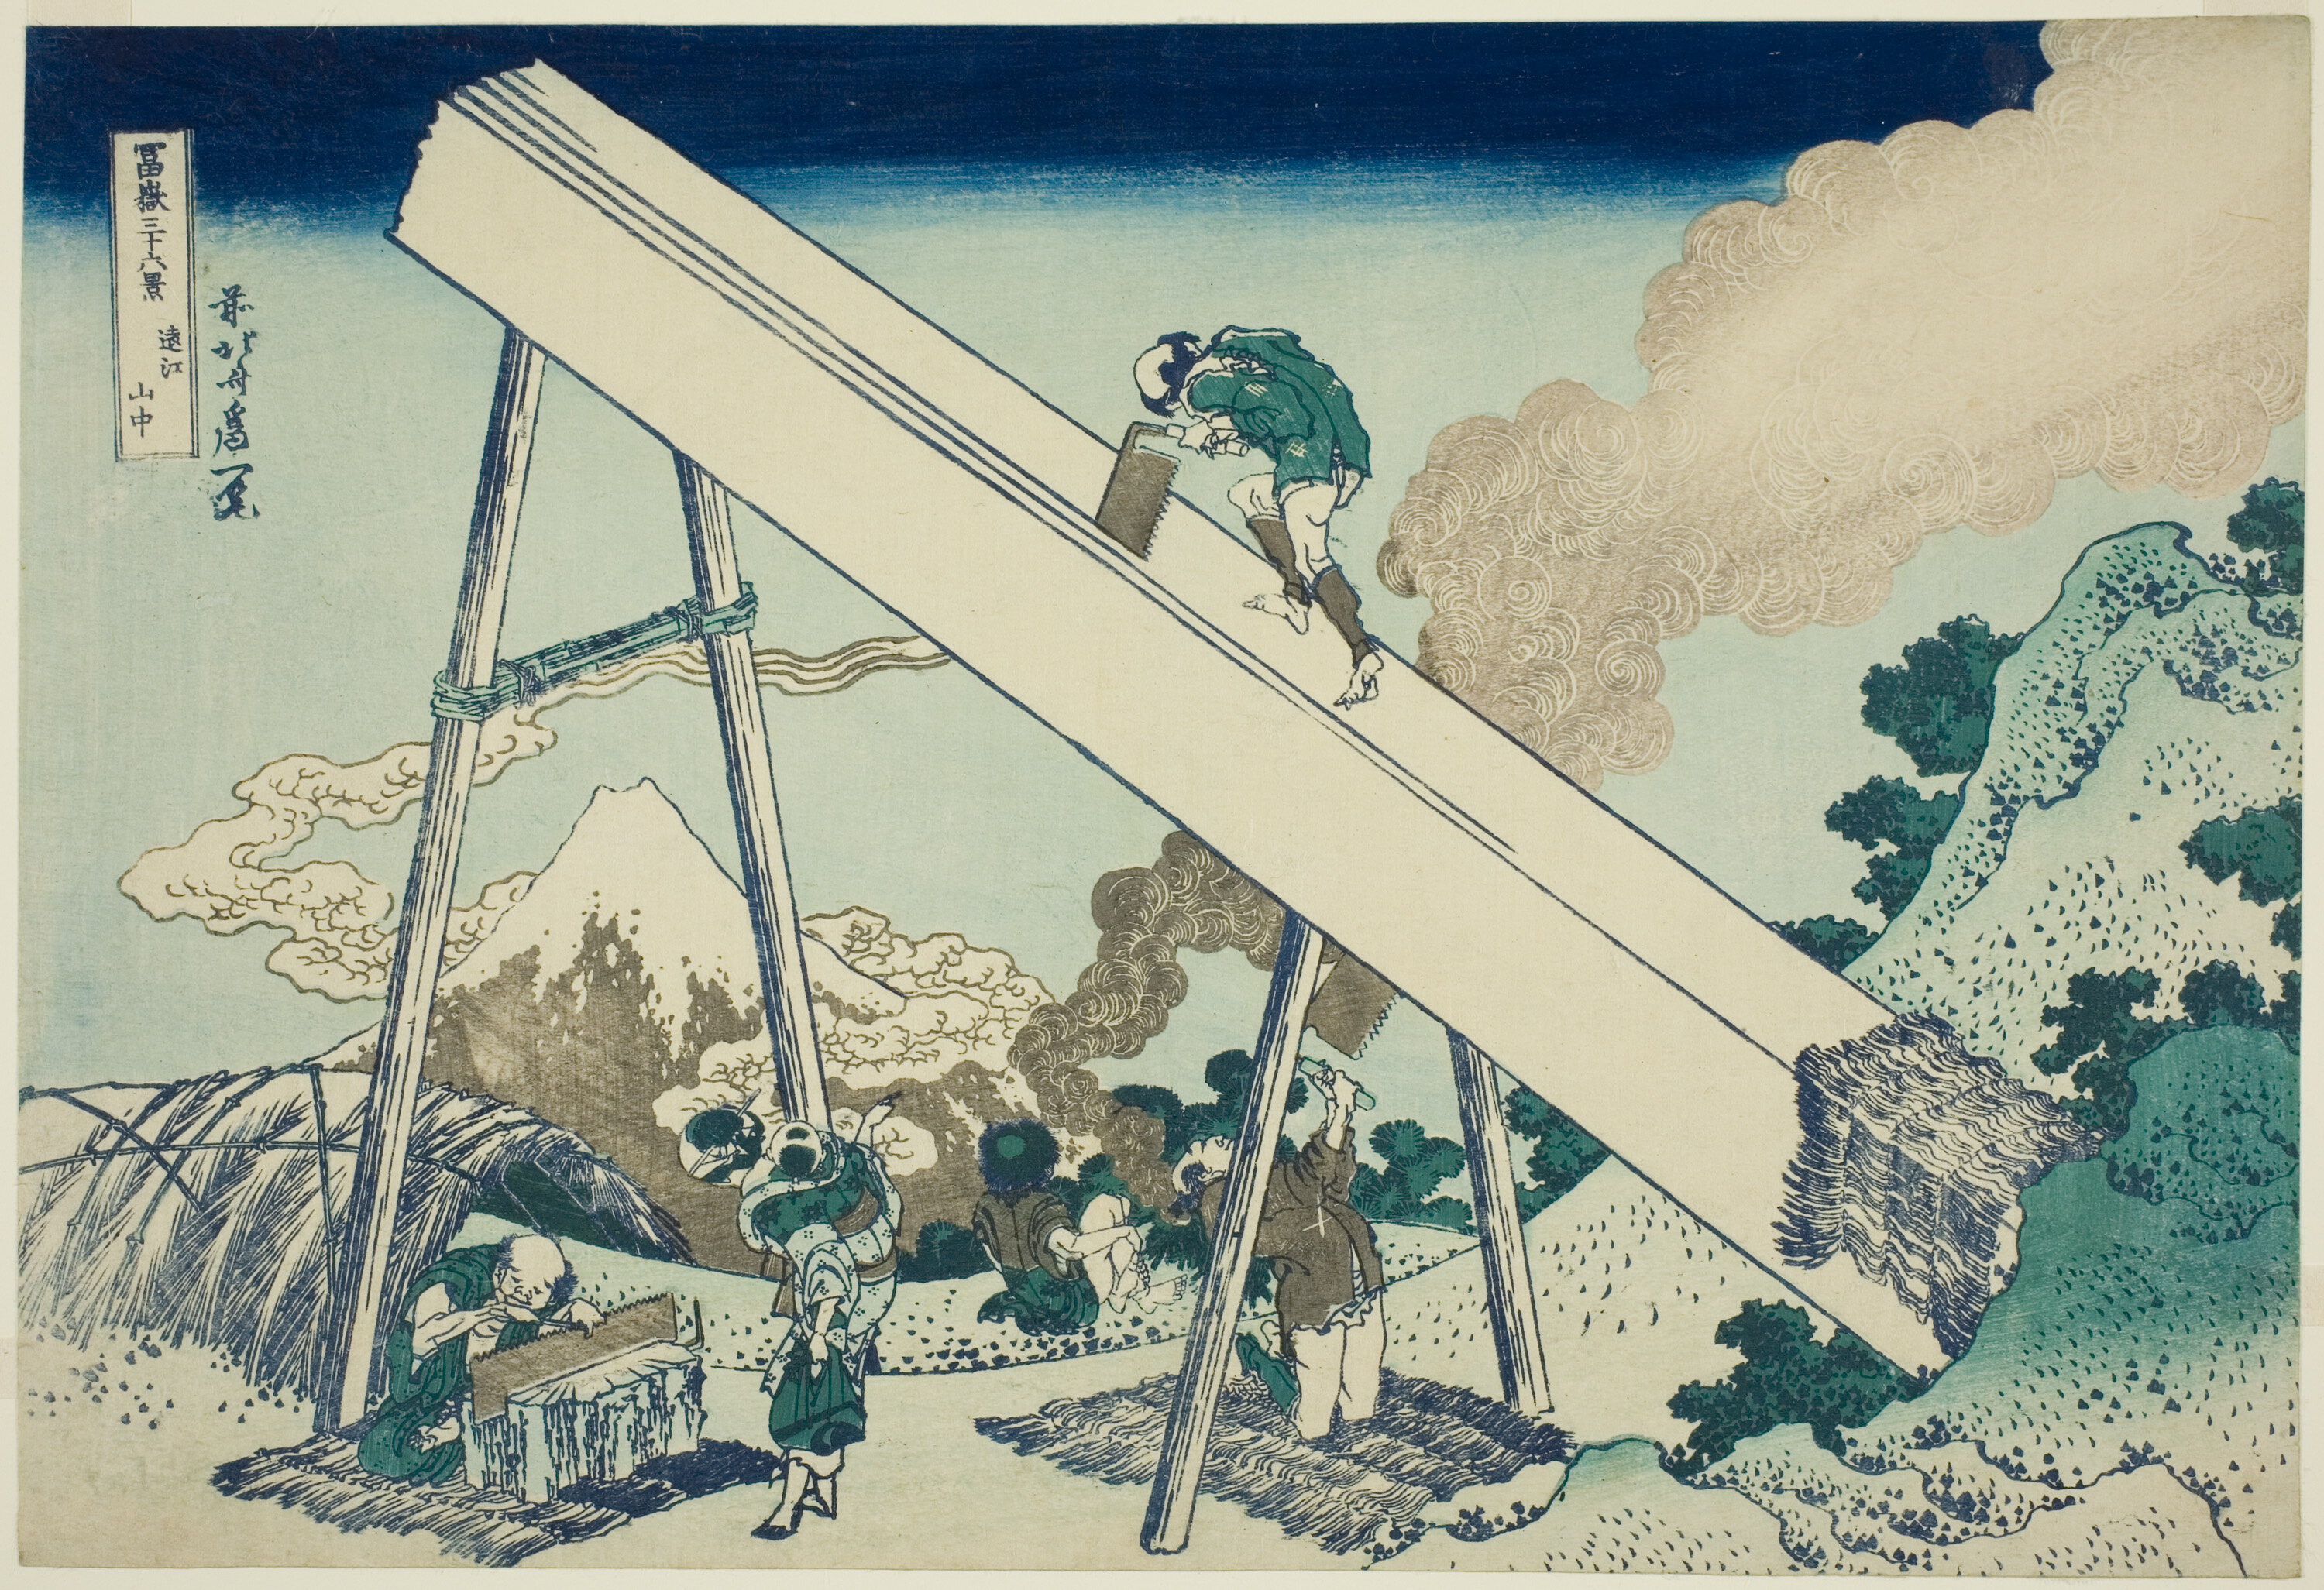 Katsushika Hokusai. In the Mountains of Tōtomi Province, from the series Thirty-six Views of Mount Fuji